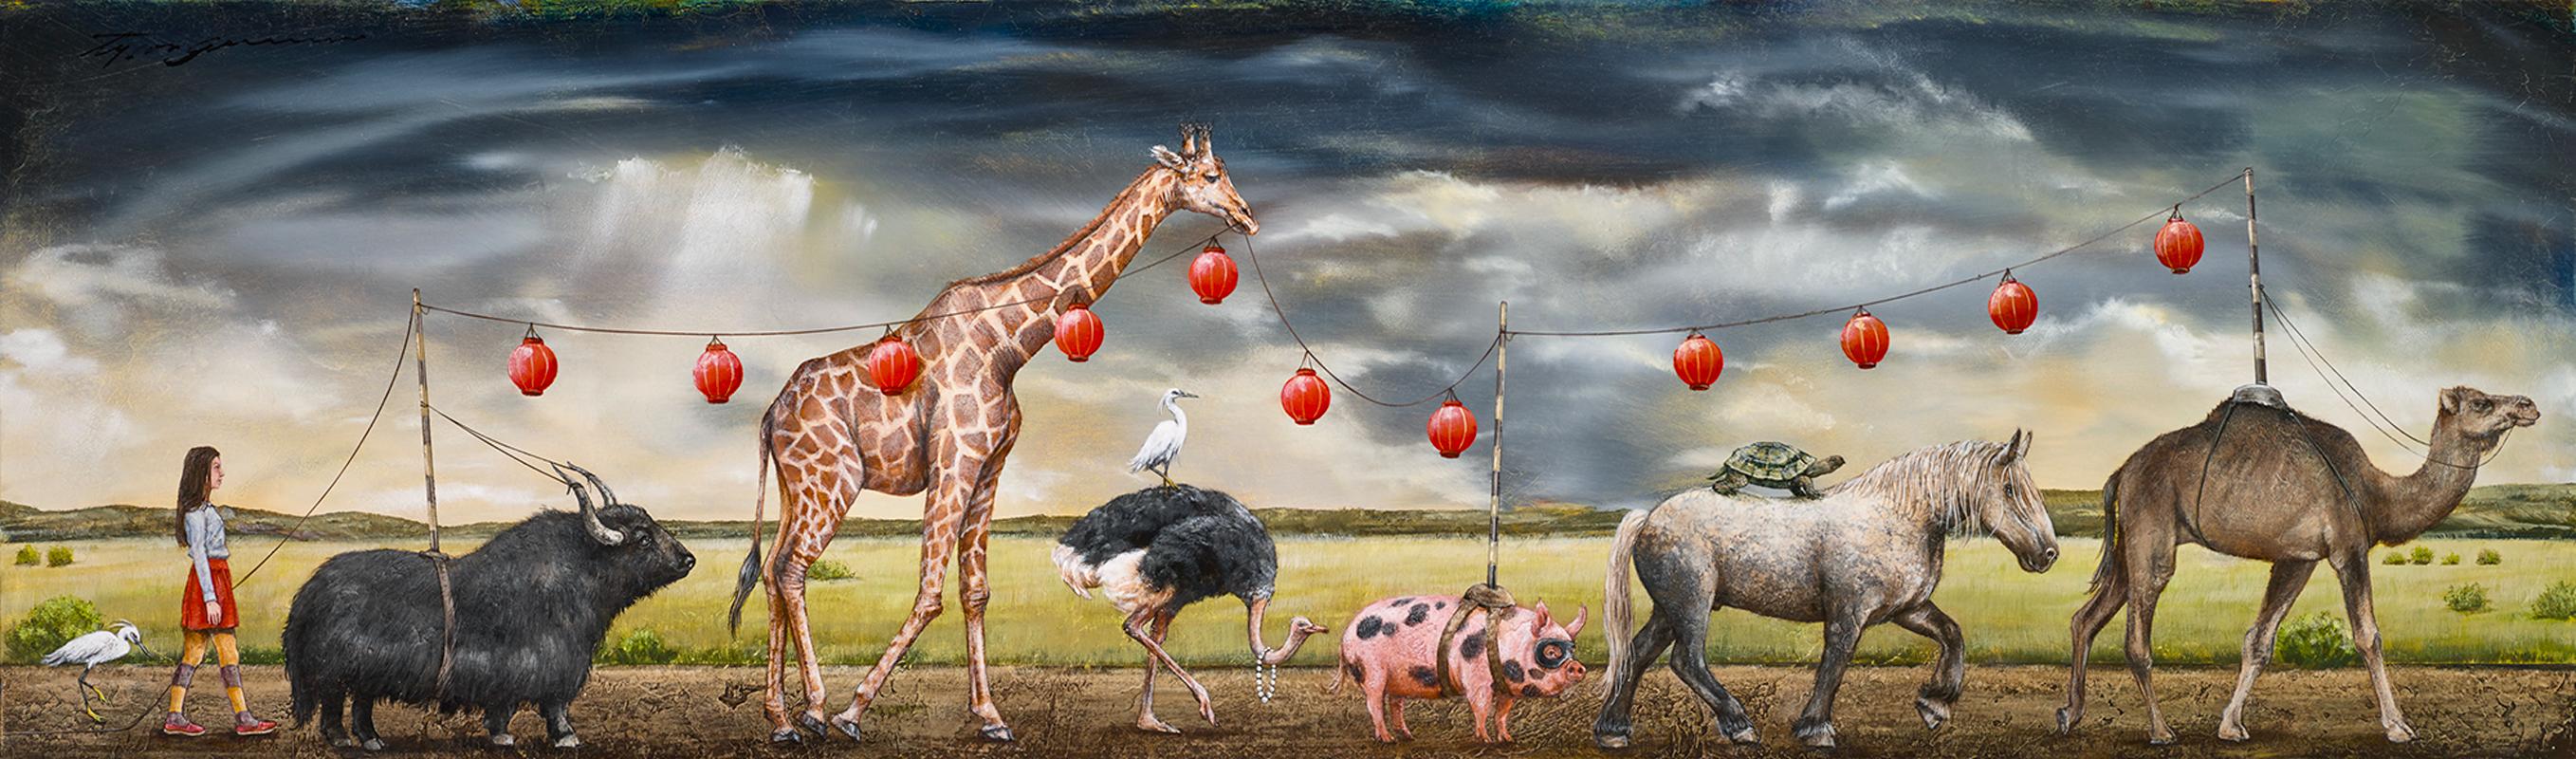 Tyson Grumm Animal Painting - Storyline